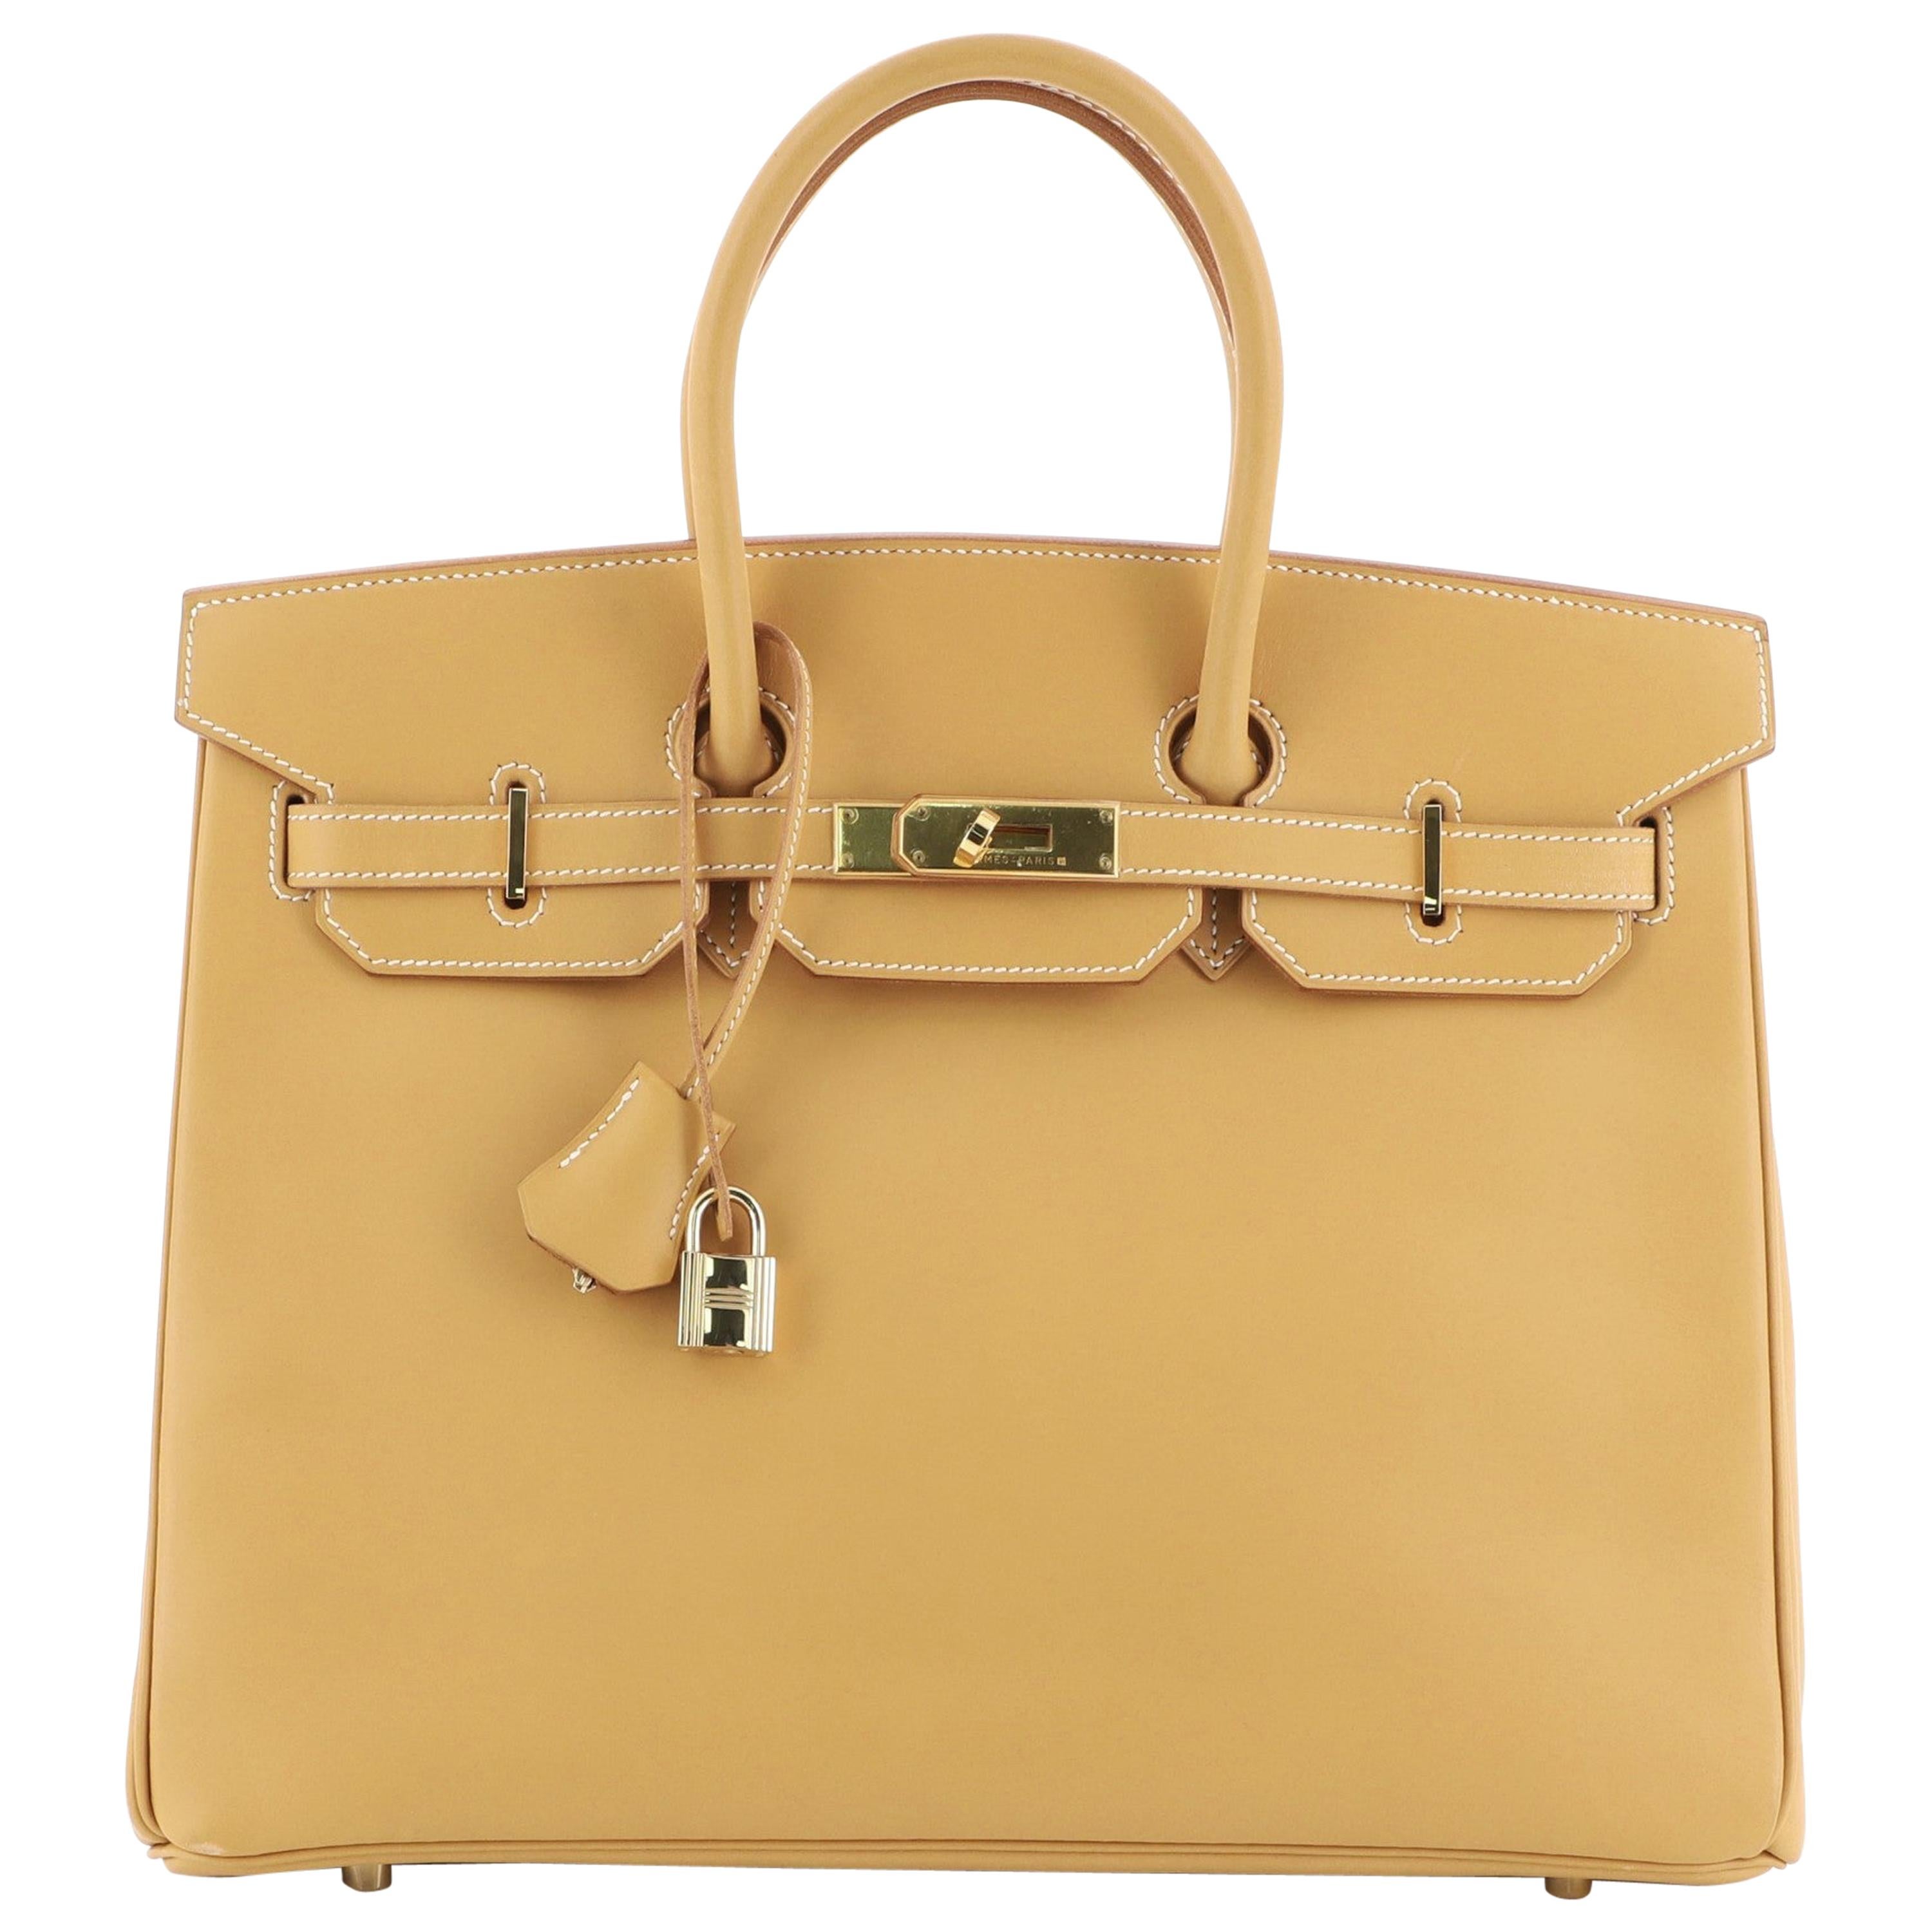 Hermes Birkin Handbag Brown Vache Natural with Gold Hardware 35